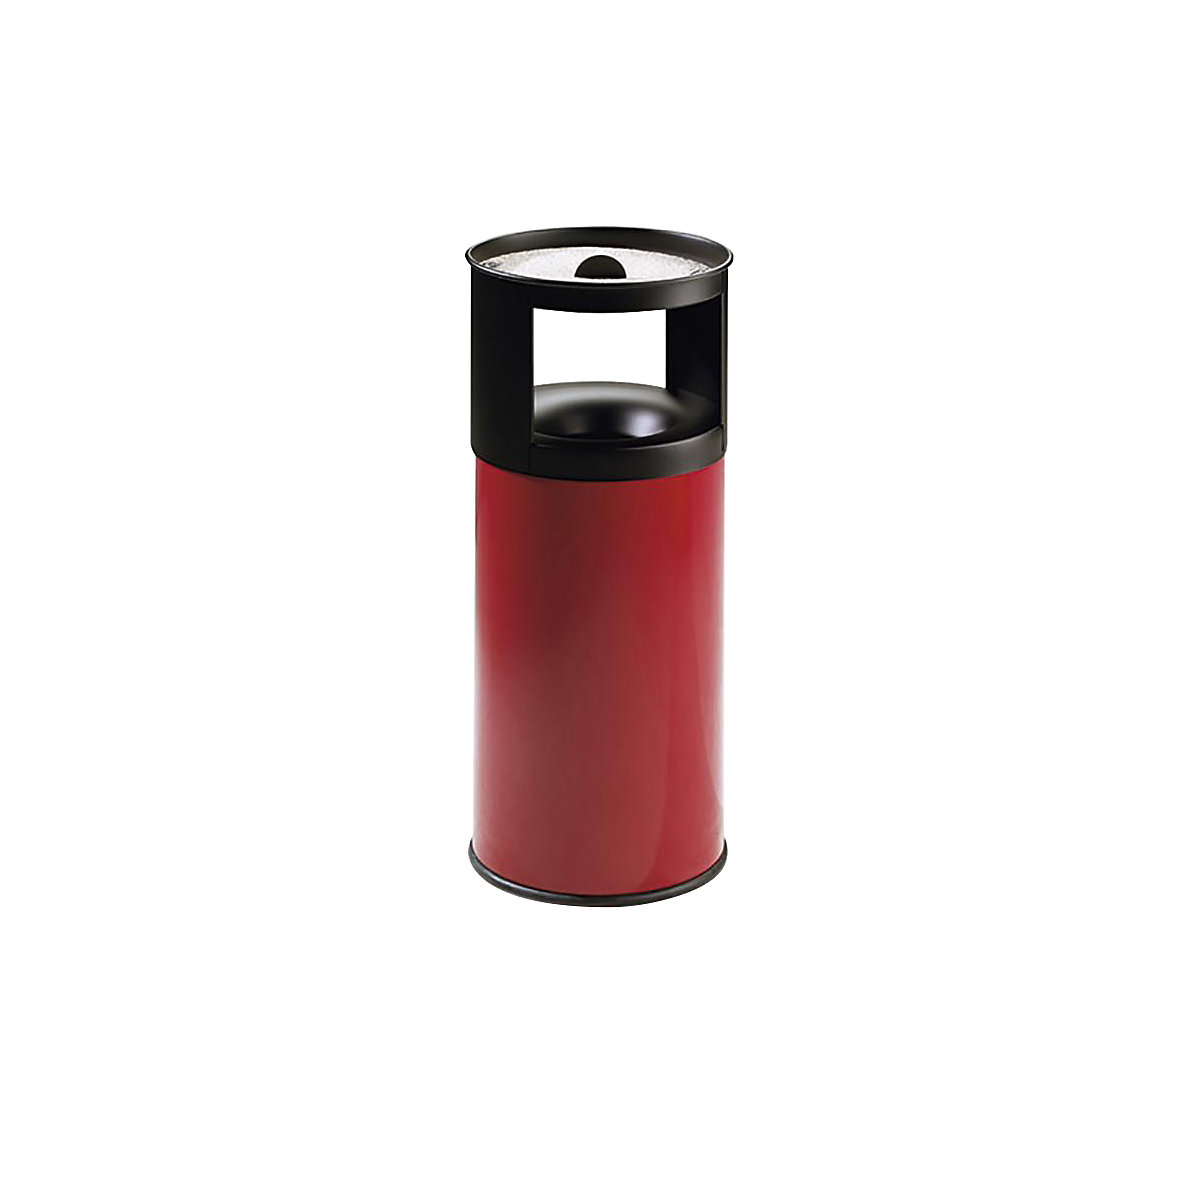 Kombinirana pepeljara, vatrogasna, volumen 75 l, VxØ 900 x 380 mm, u crvenoj boji-4